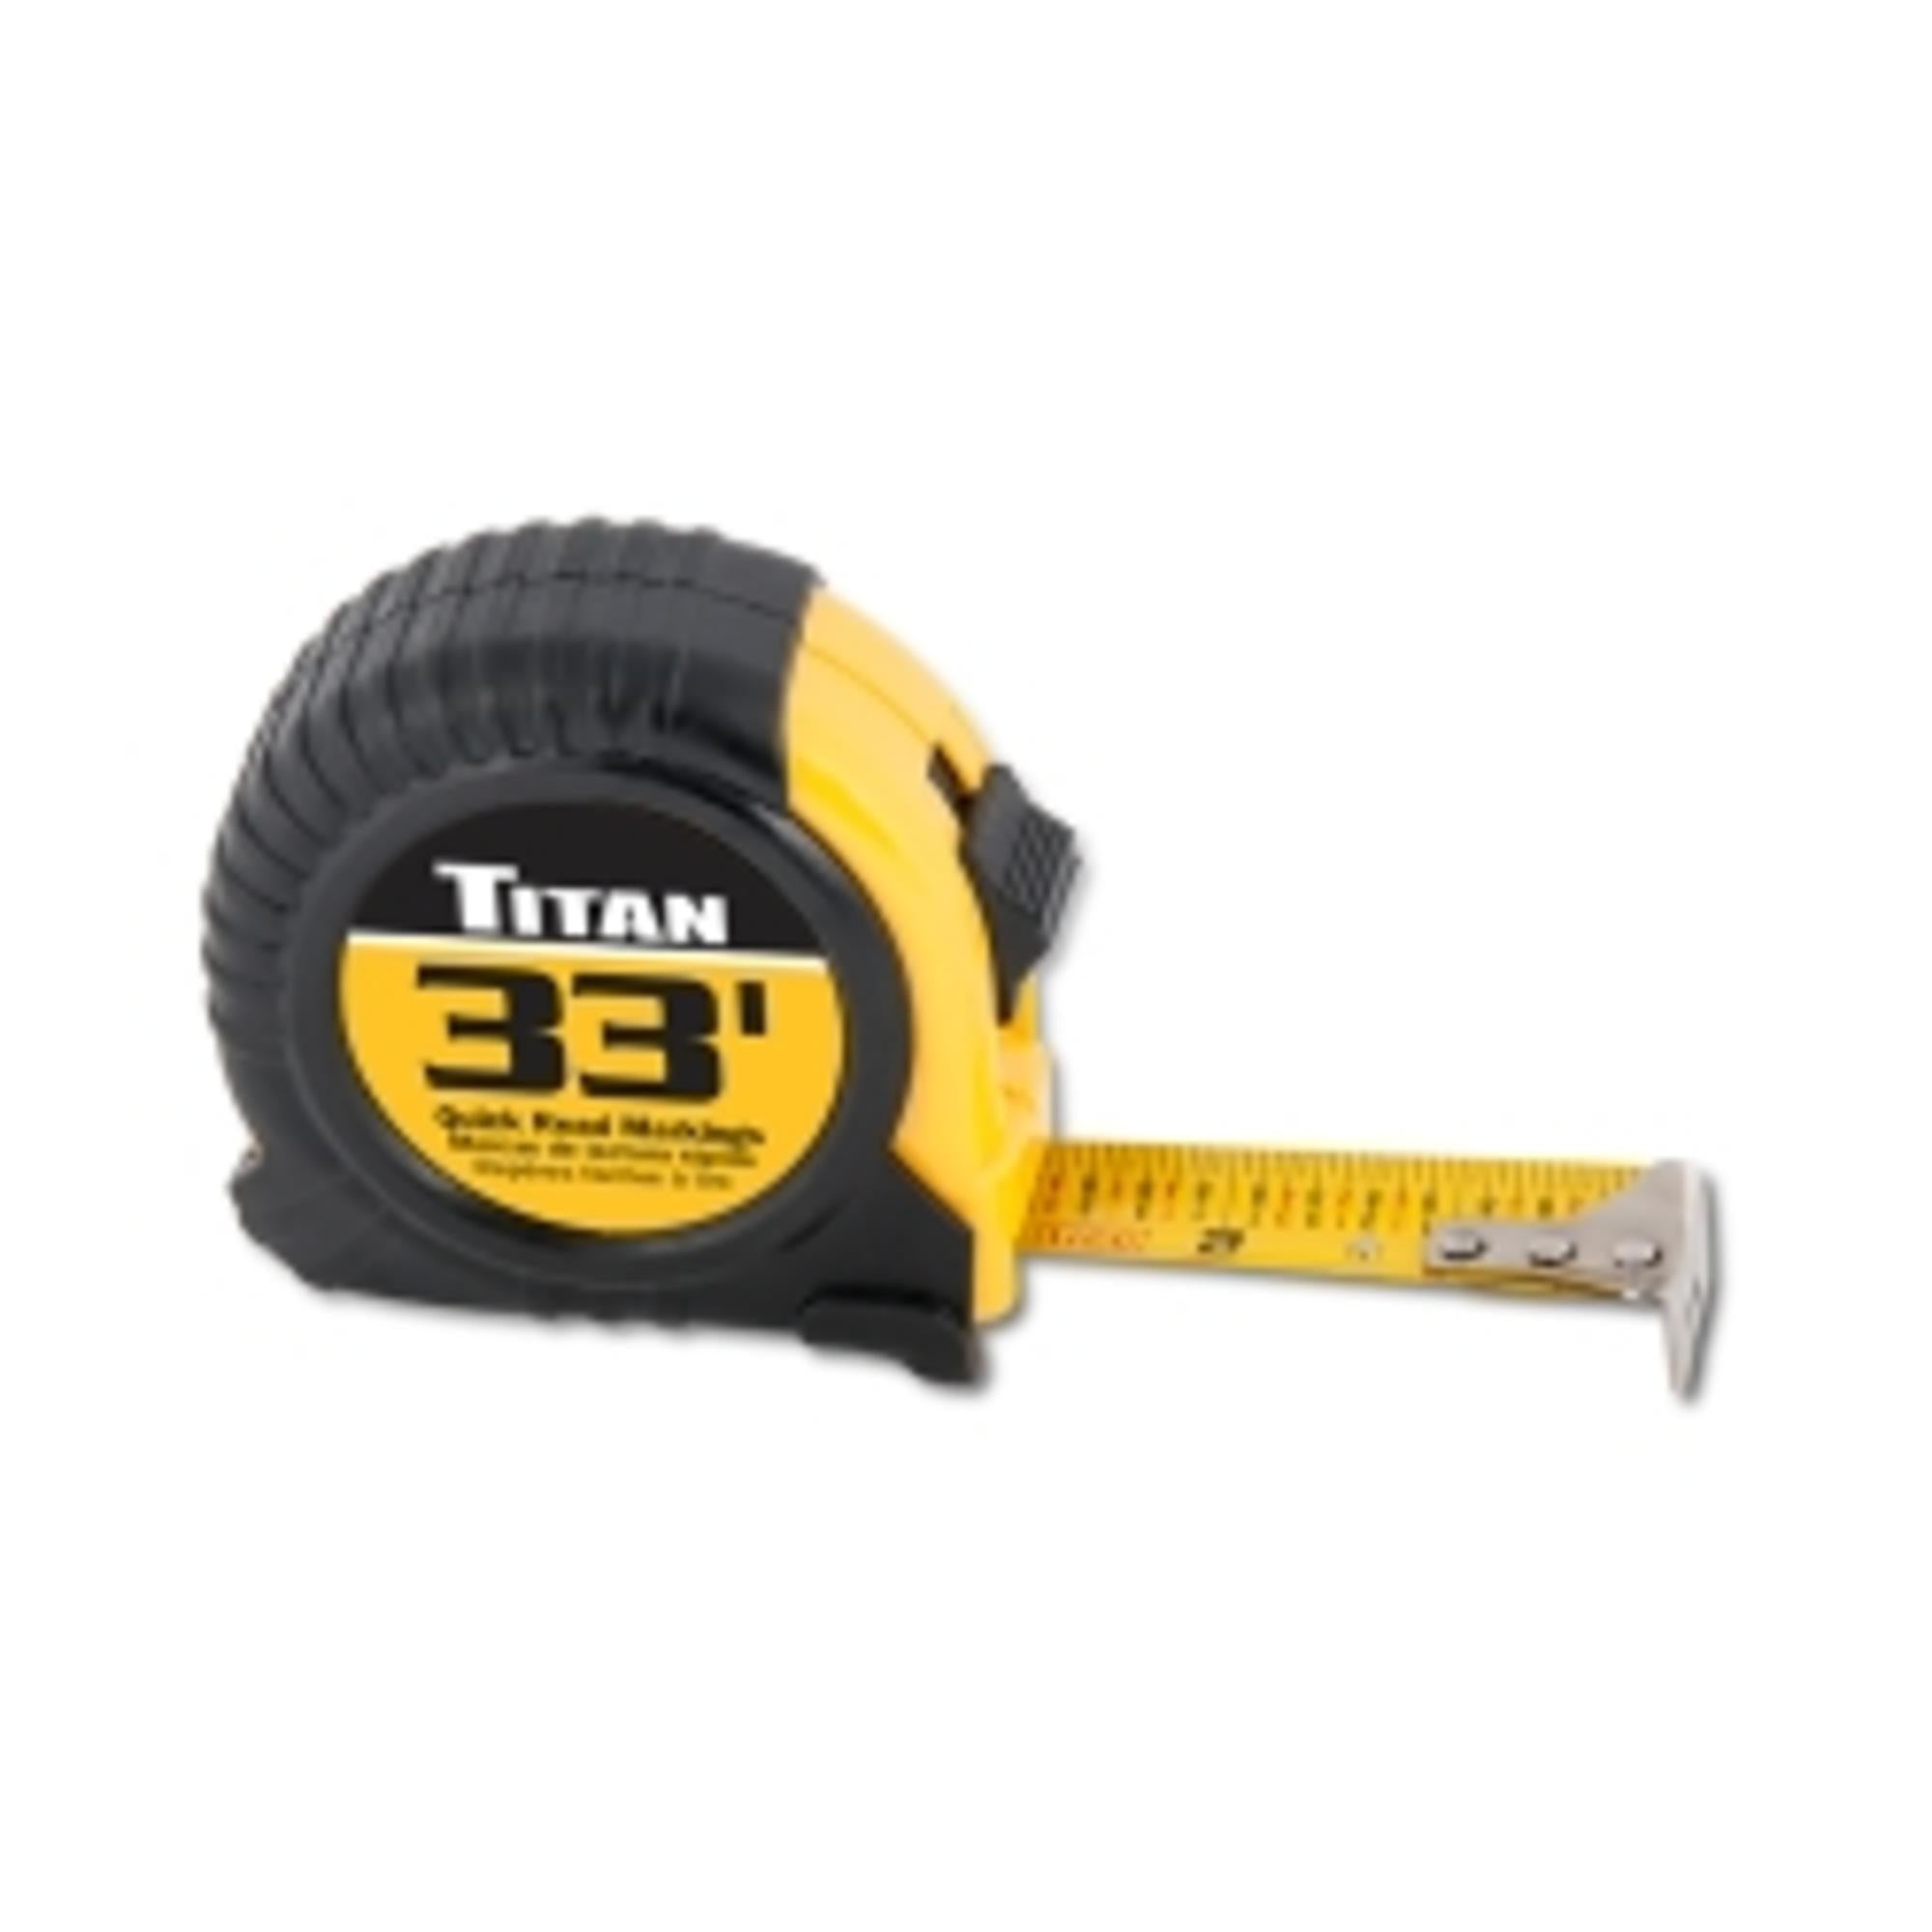 Titan - Quick-Read Tape Measures (TIT-10908) - MPR Tools & Equipment